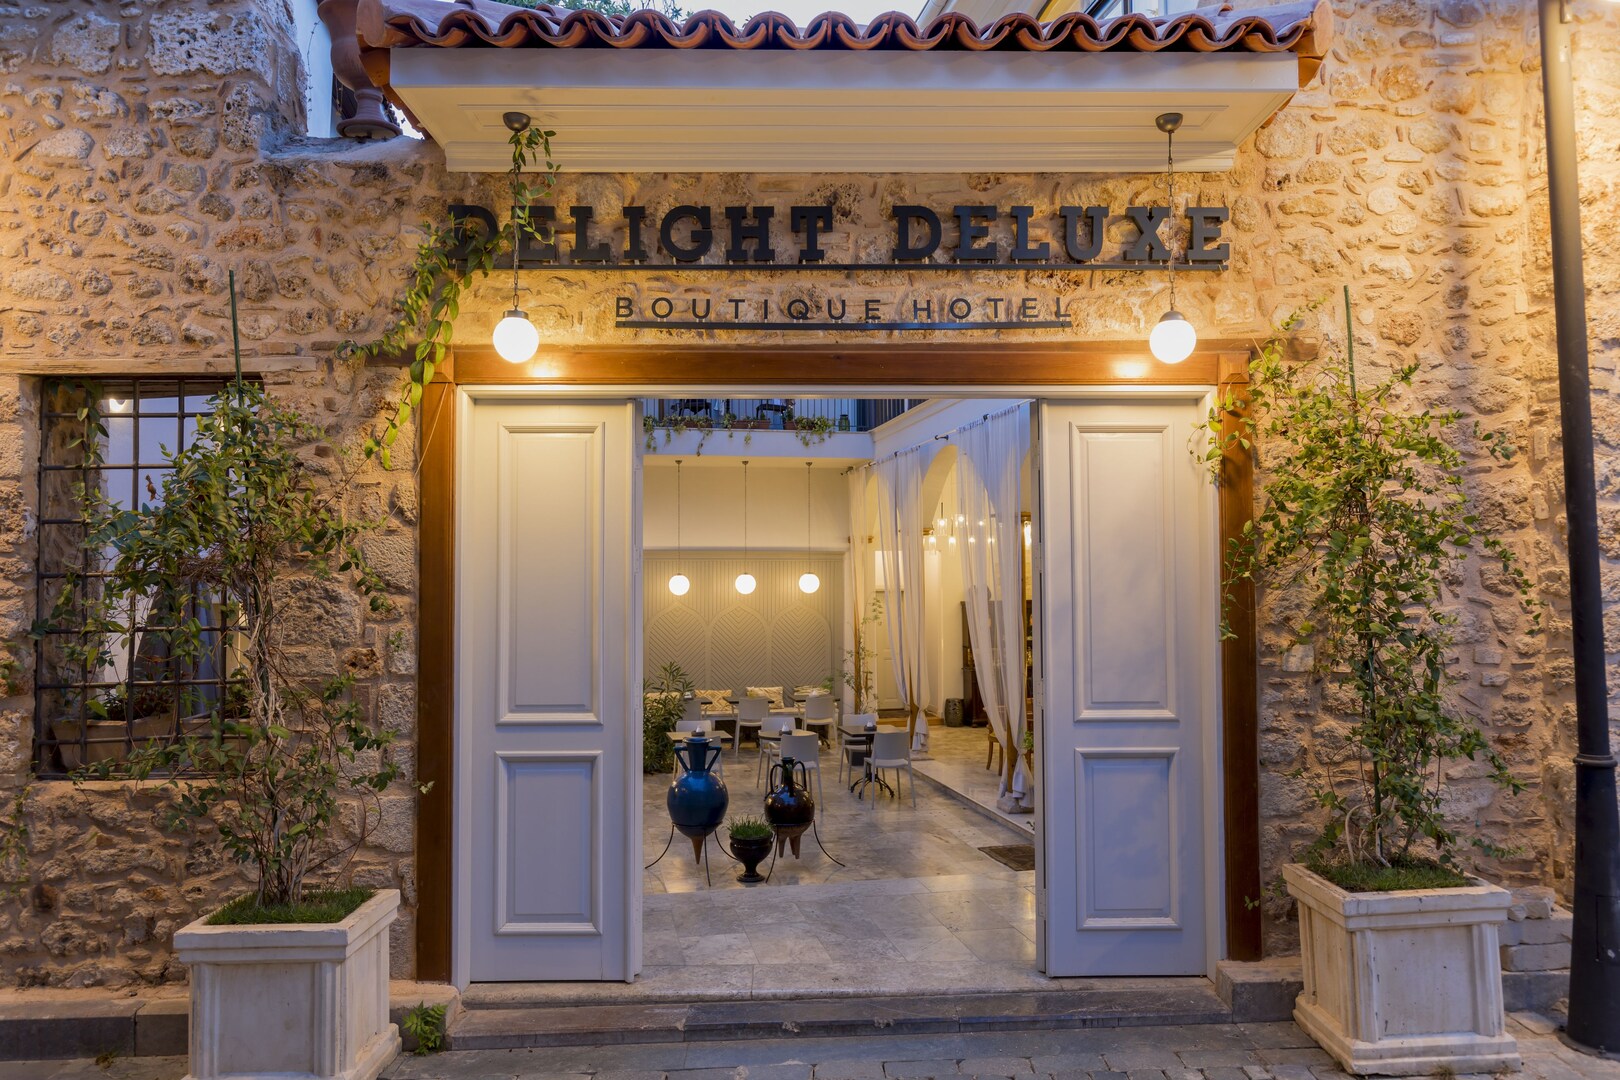 Delight Deluxe Boutique Hotel